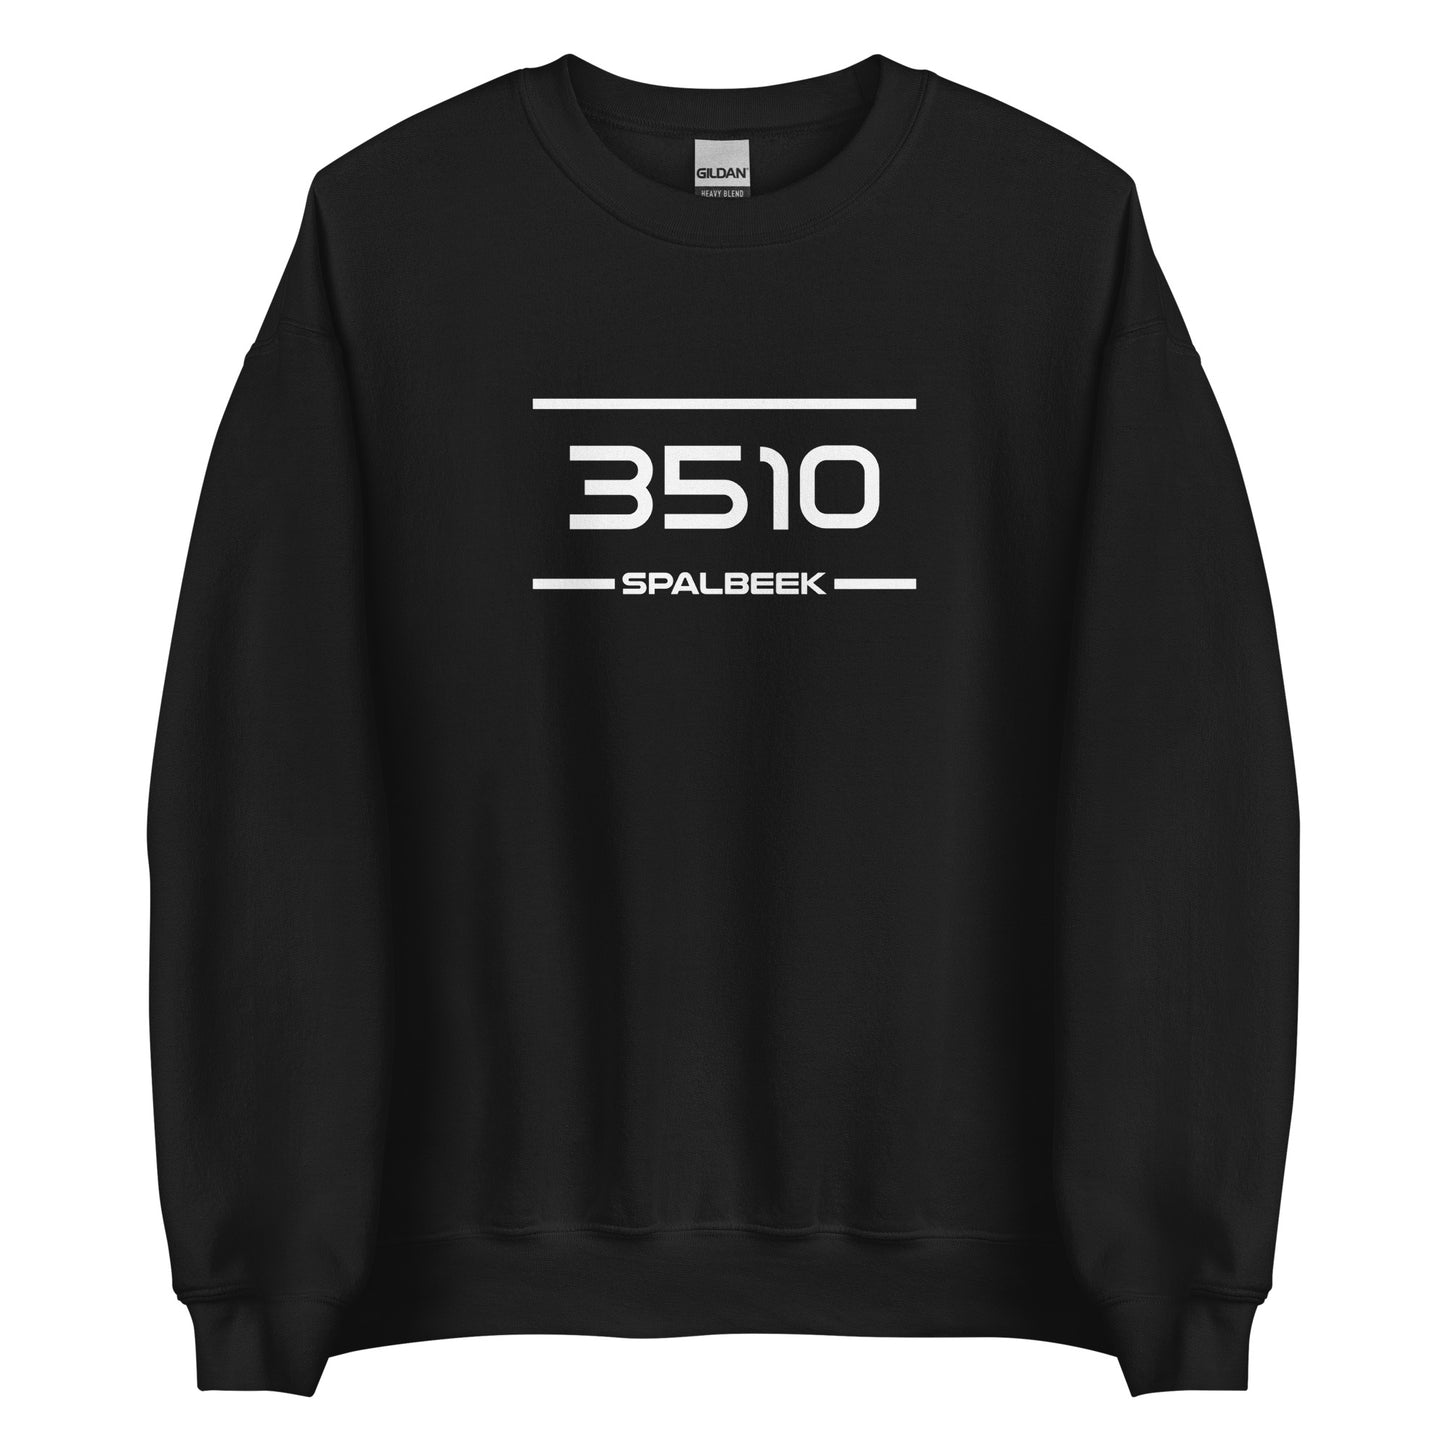 Sweater - 3510 - Spalbeek (M/V)